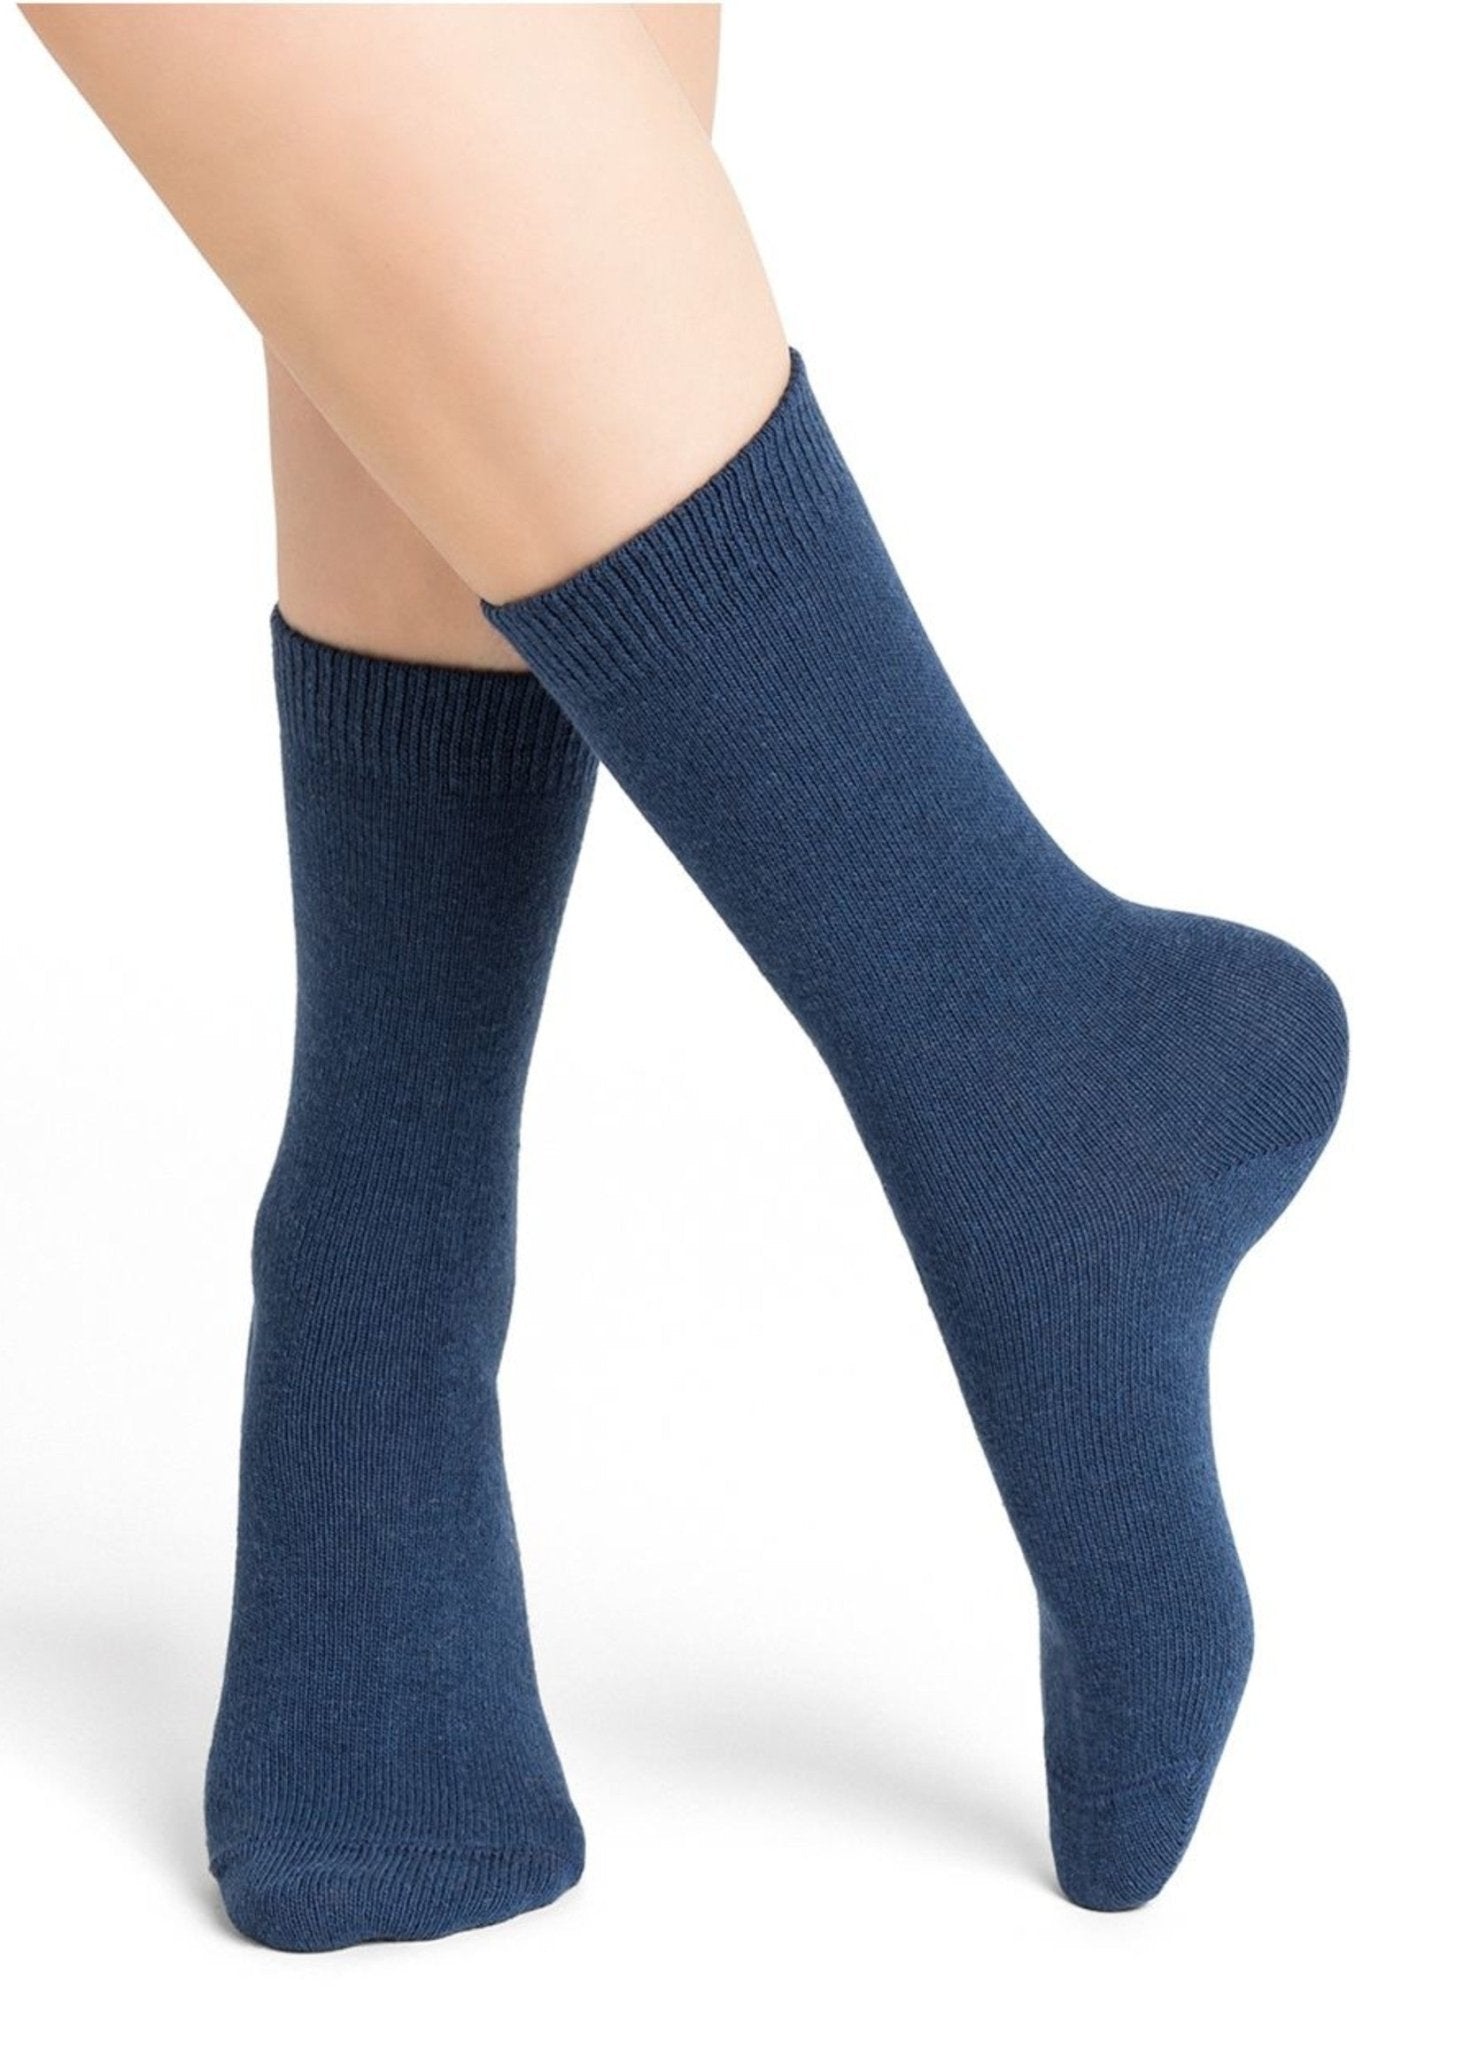 Cashmere Socks - Bleuforet - Danali - 6095-LZ4